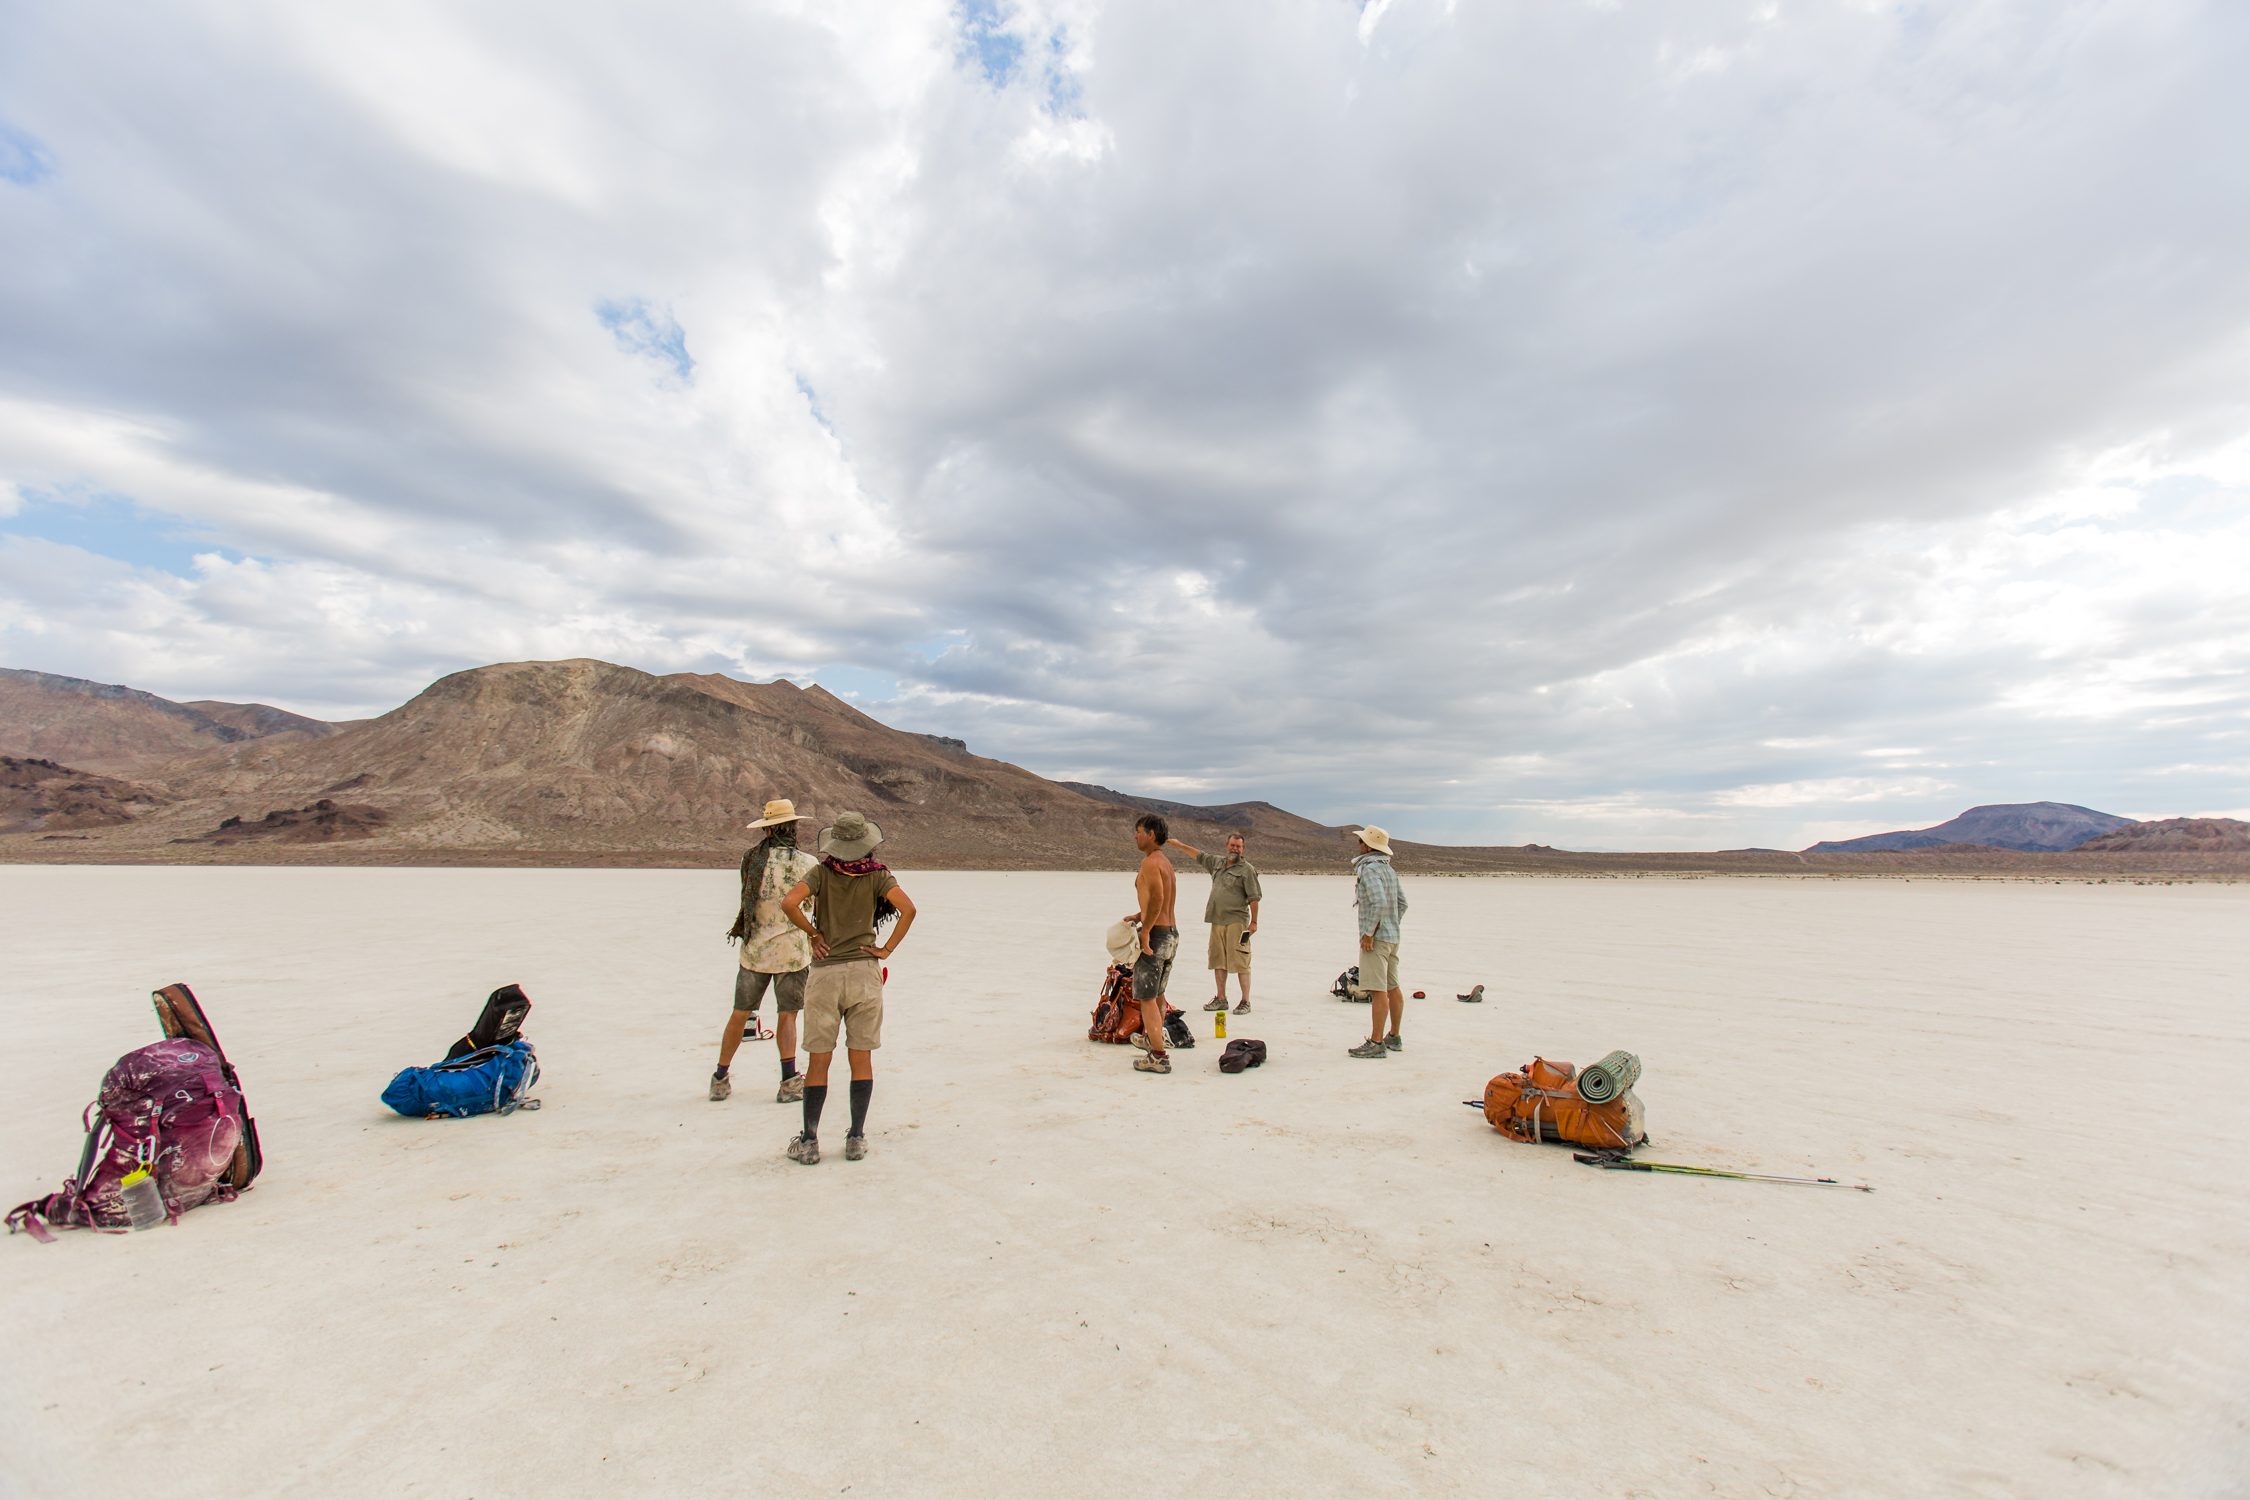 Walking to Burning Man across the Black Rock Desert, Neveda with Craig Childs, Timmy ONeil, john Tveten, Tom O'Heara & Editha